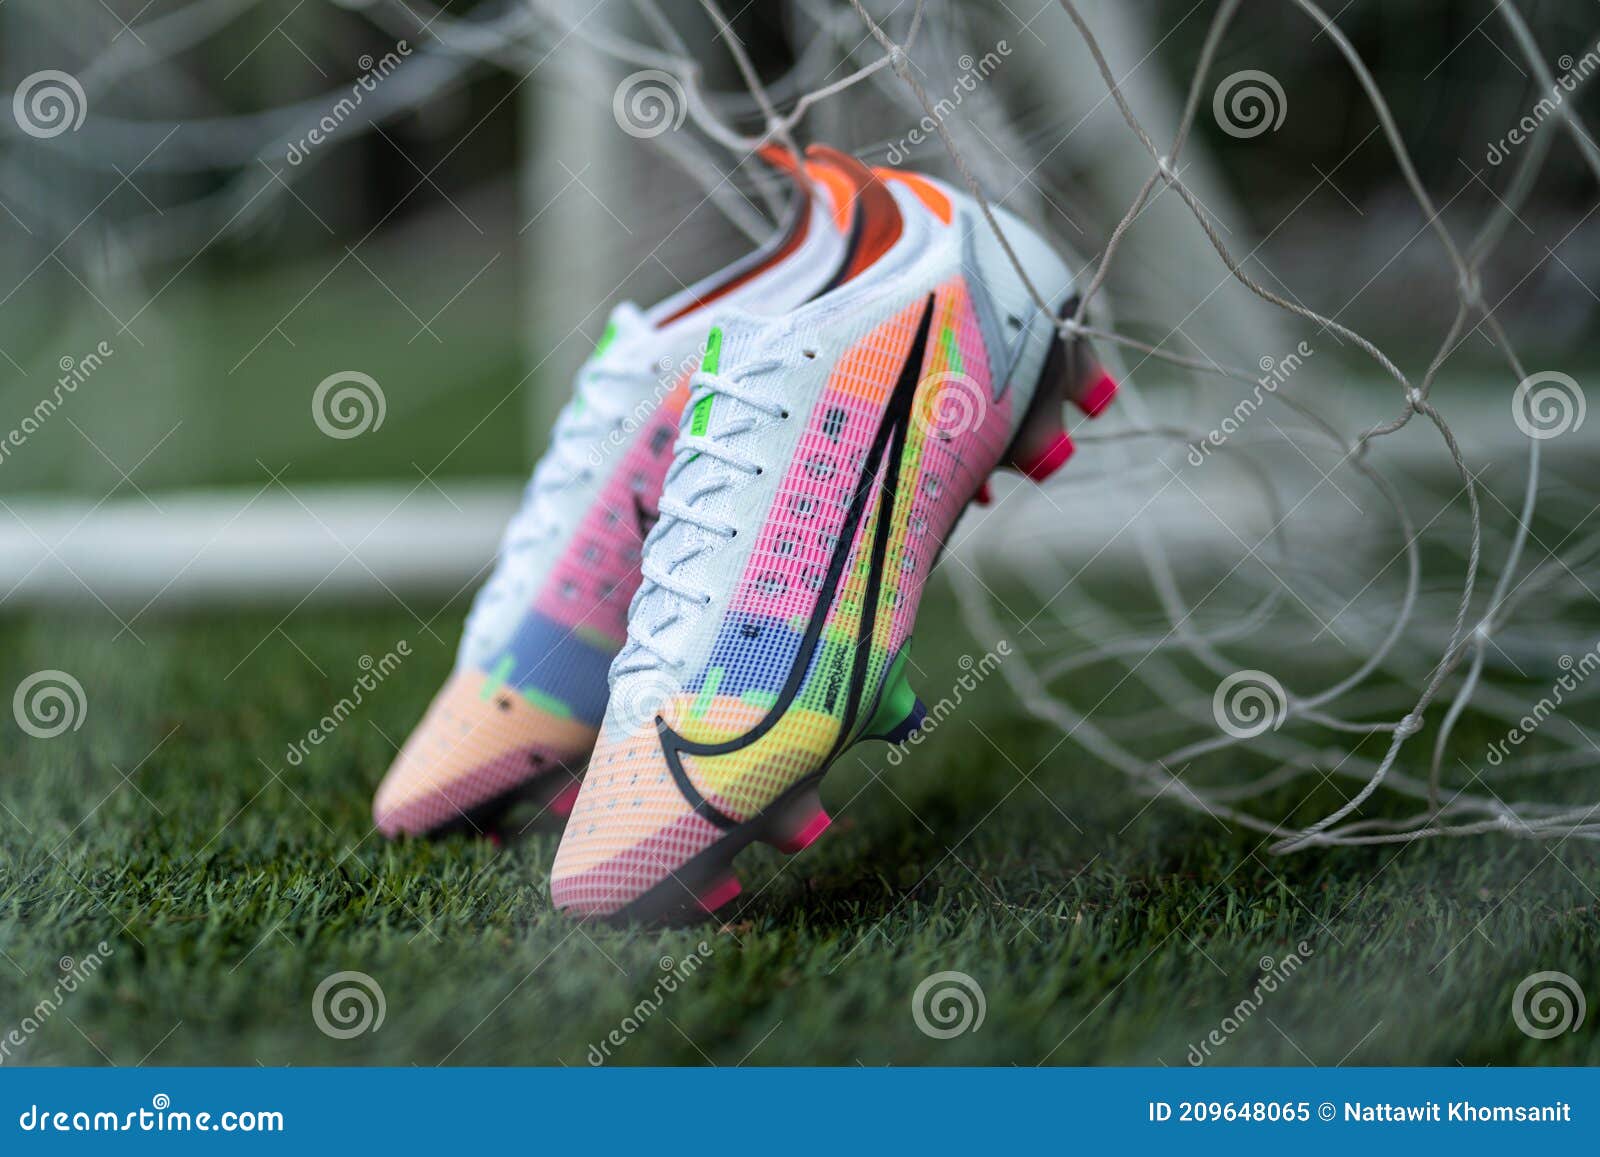 Nike Mercurial Vapor 14 Nuevo Zapato De Futbol Imagen editorial - de bangkok, equipo: 209648065